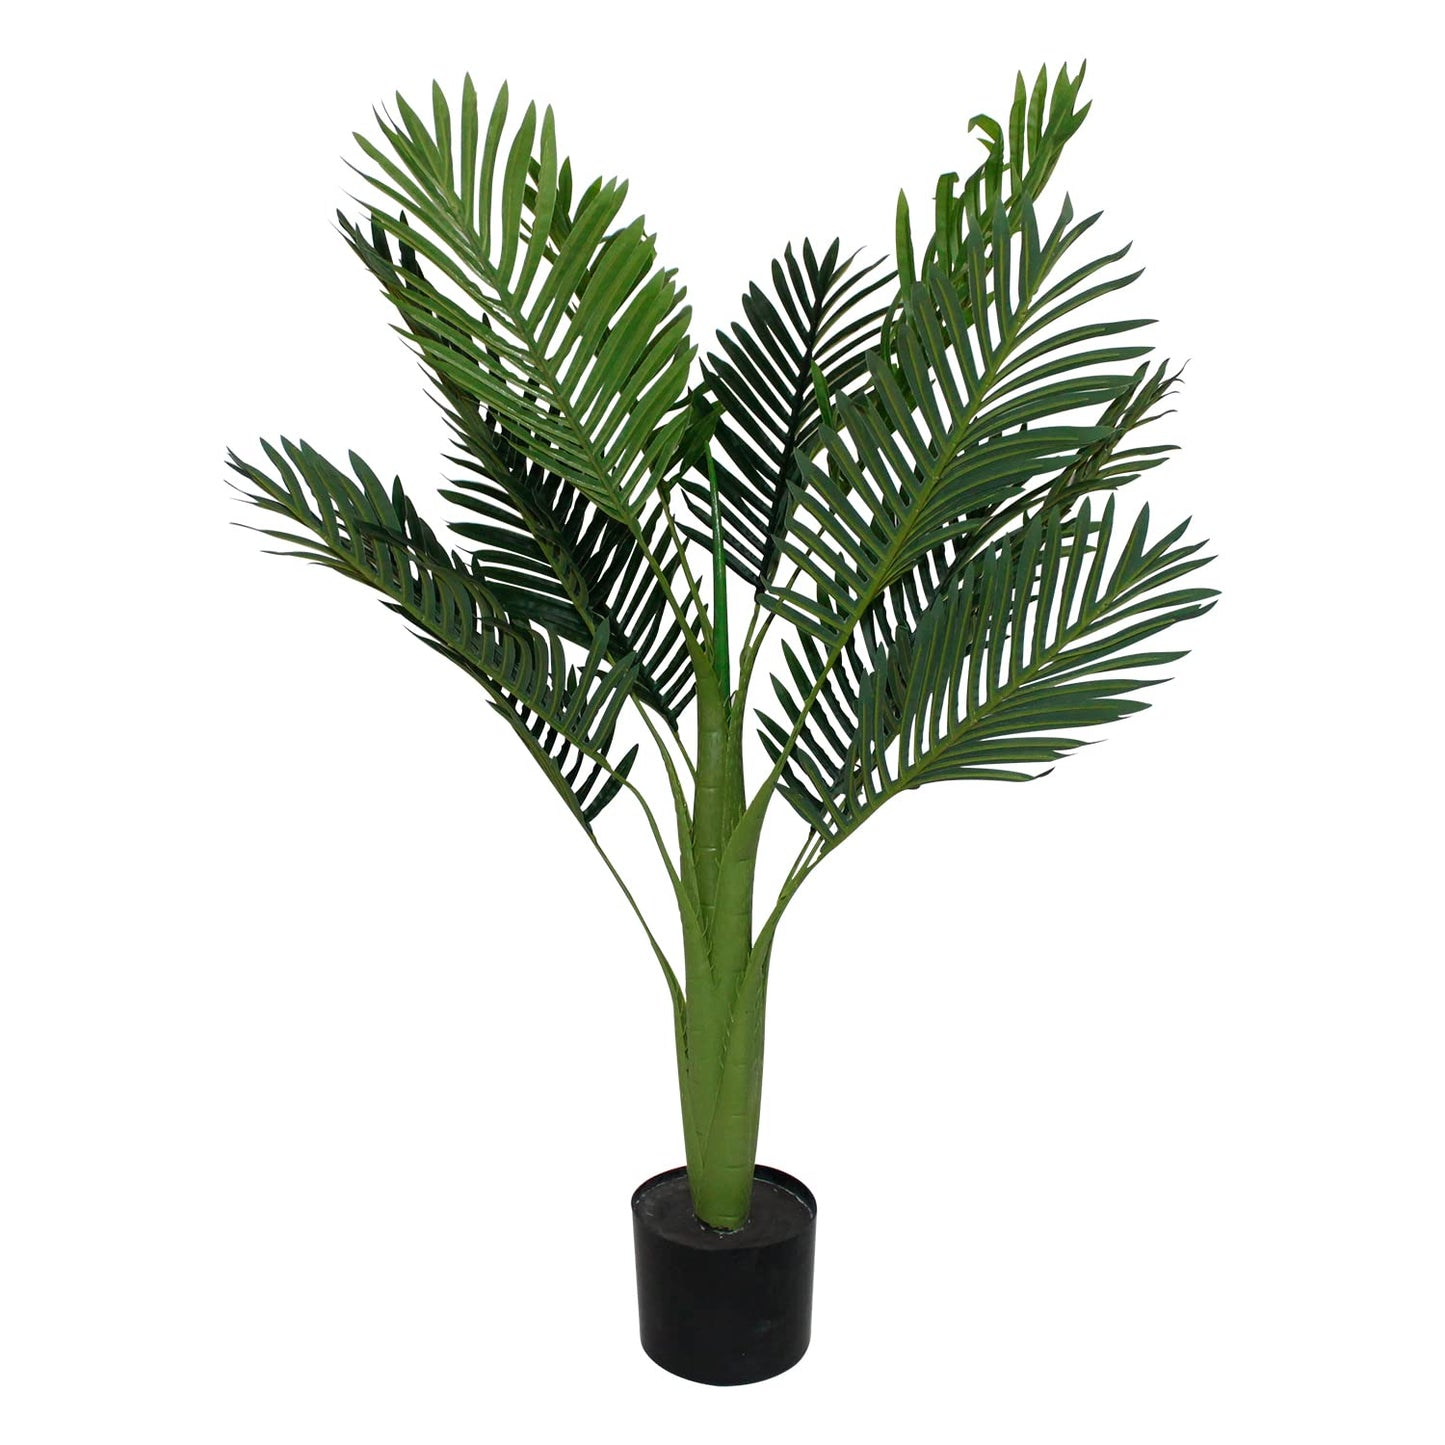 Kayra Decor Pygmy 3 Feet Artificial Palm Tree - Big Size with Pot (Black)